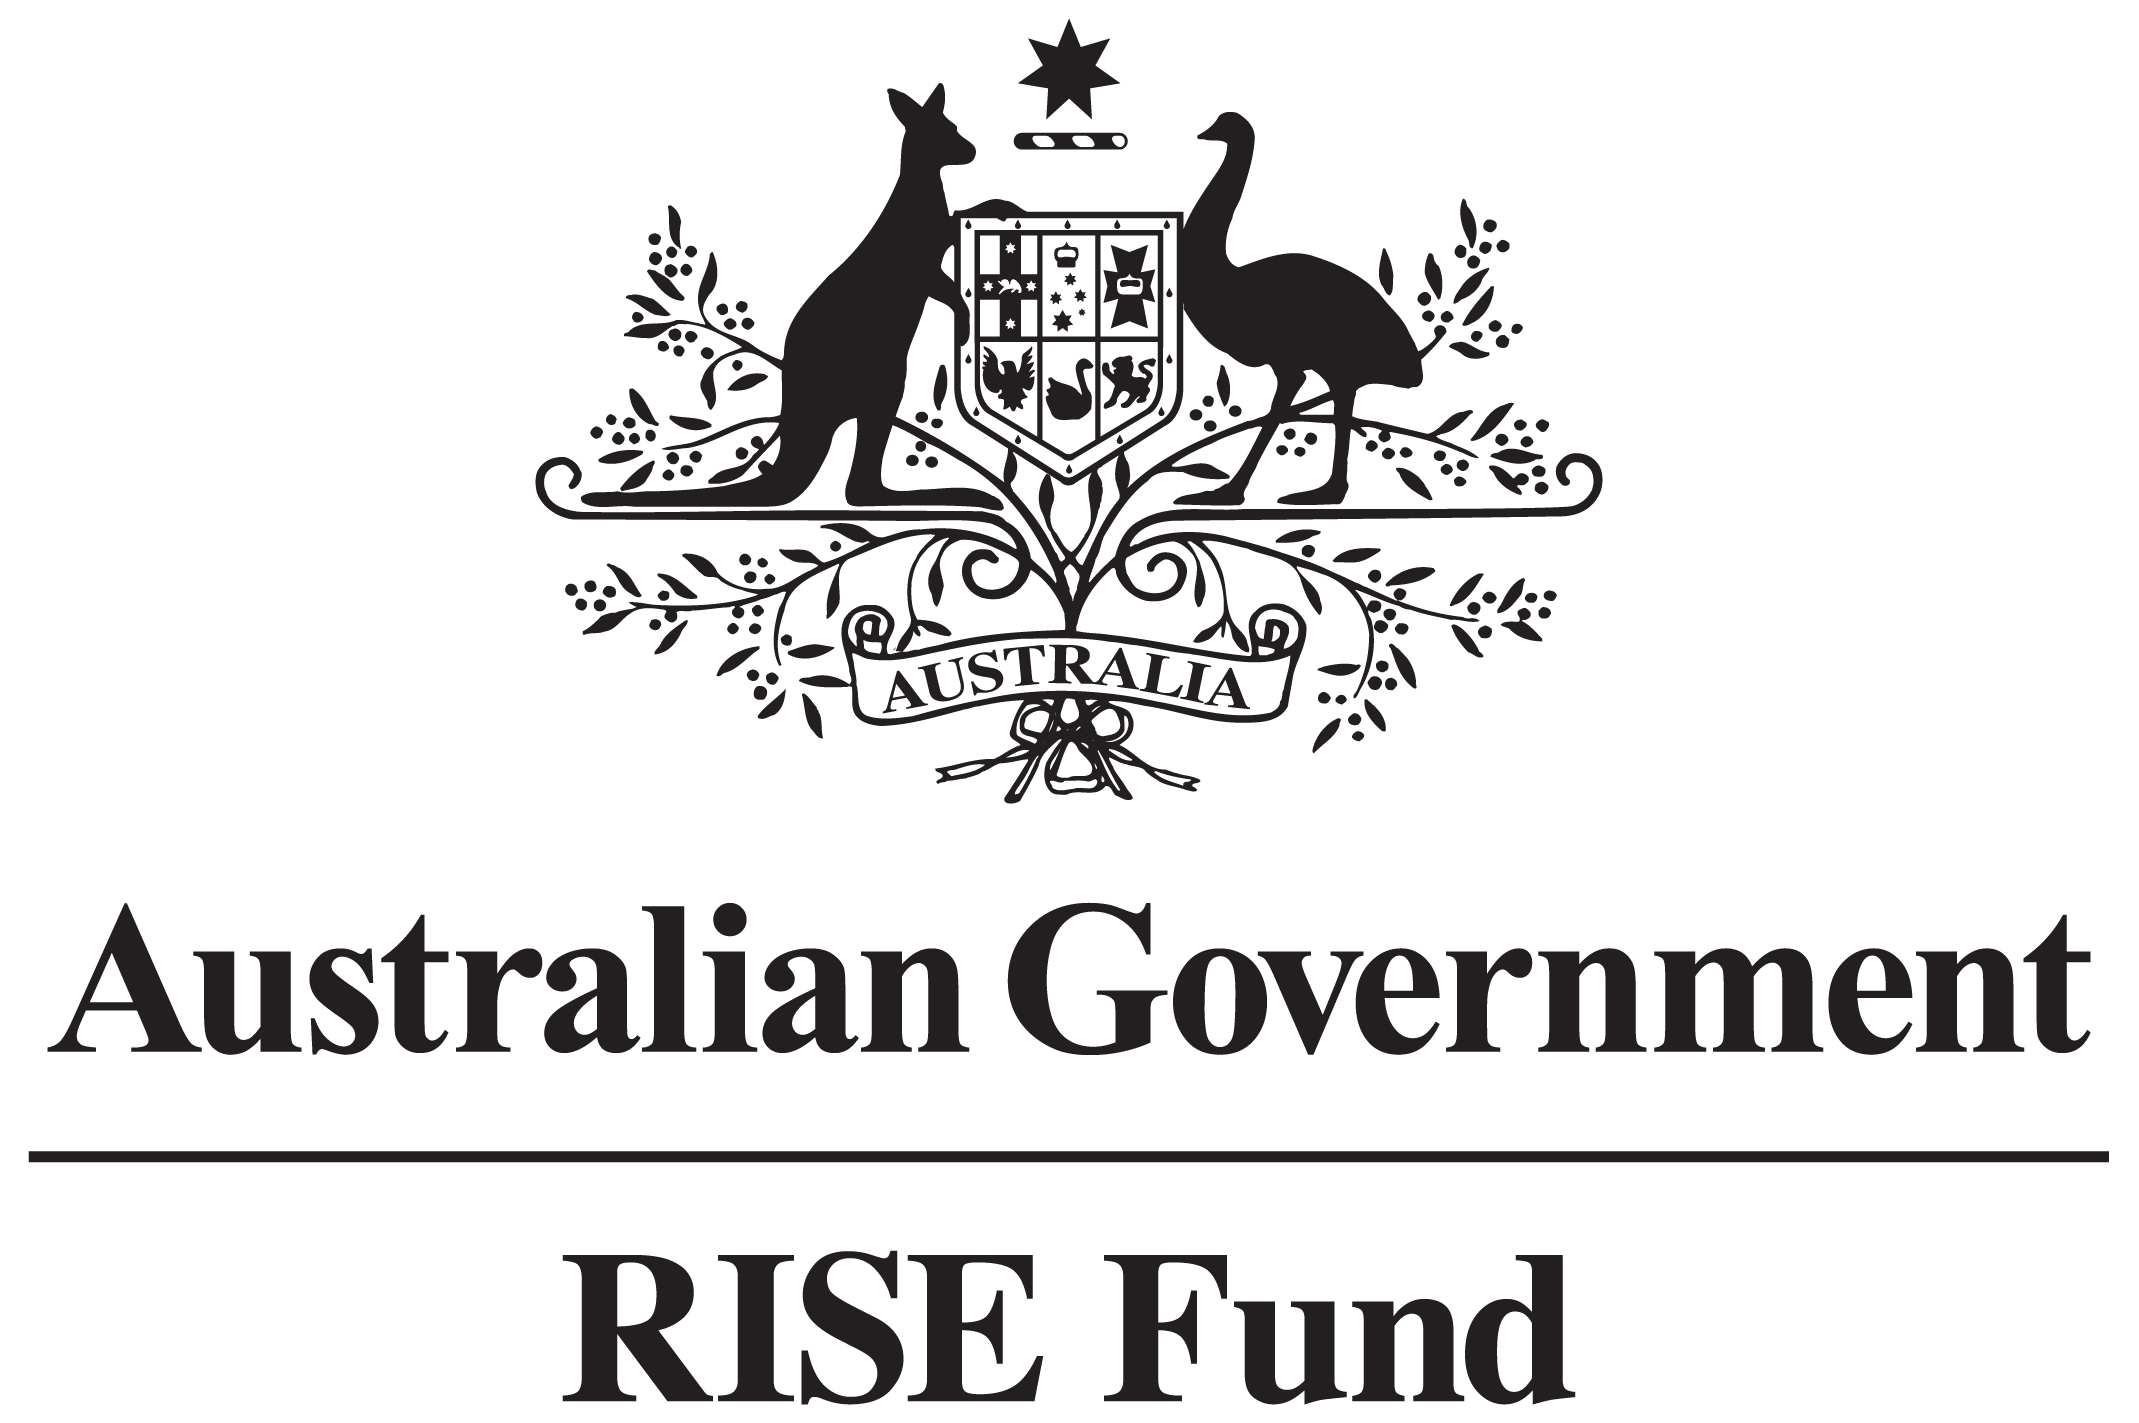 Australian Government RISE Fund